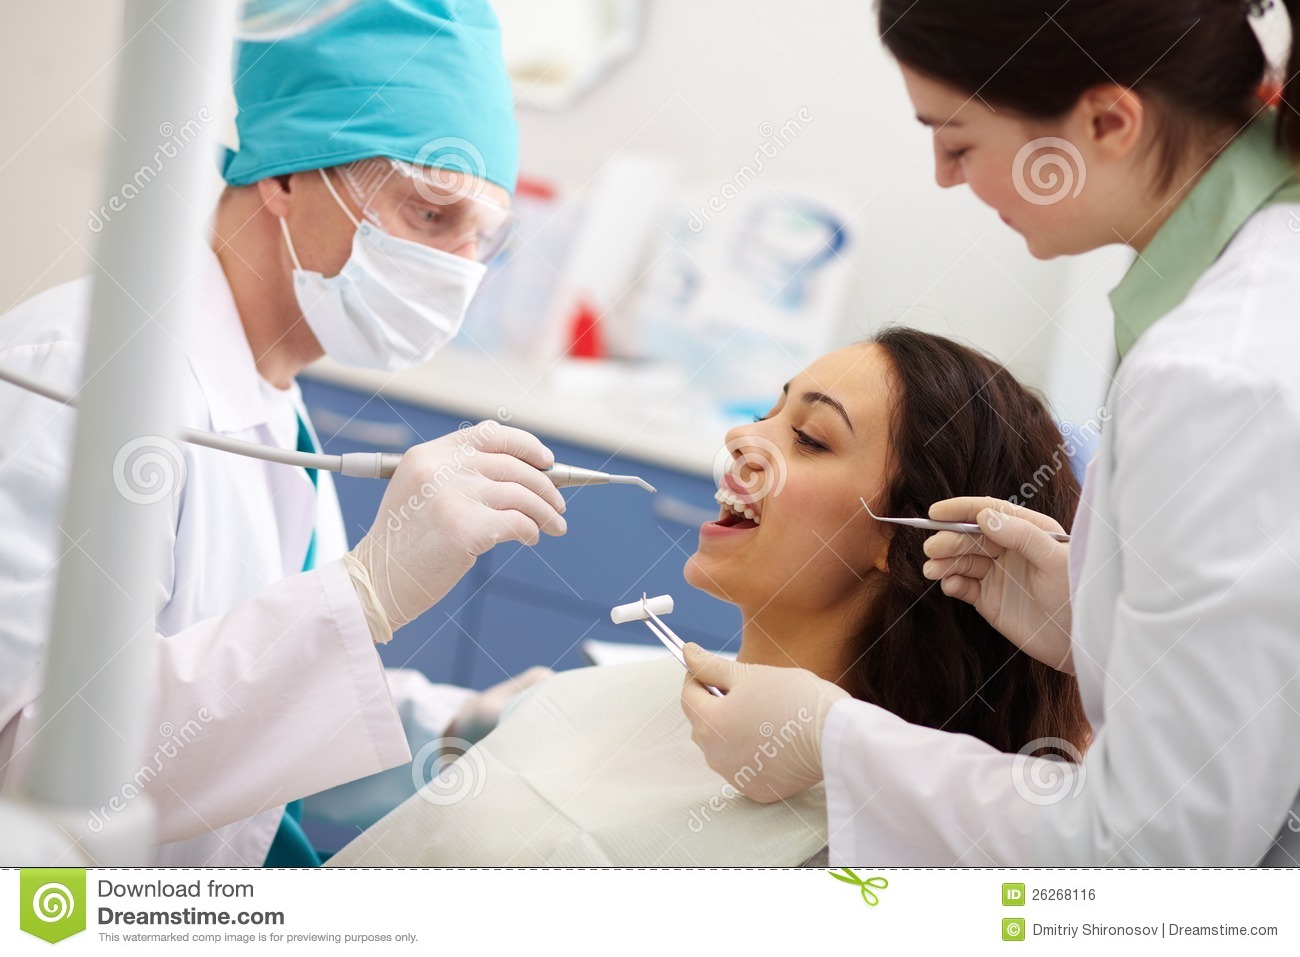 Dental Check Up Royalty Free Stock Image   Image  26268116